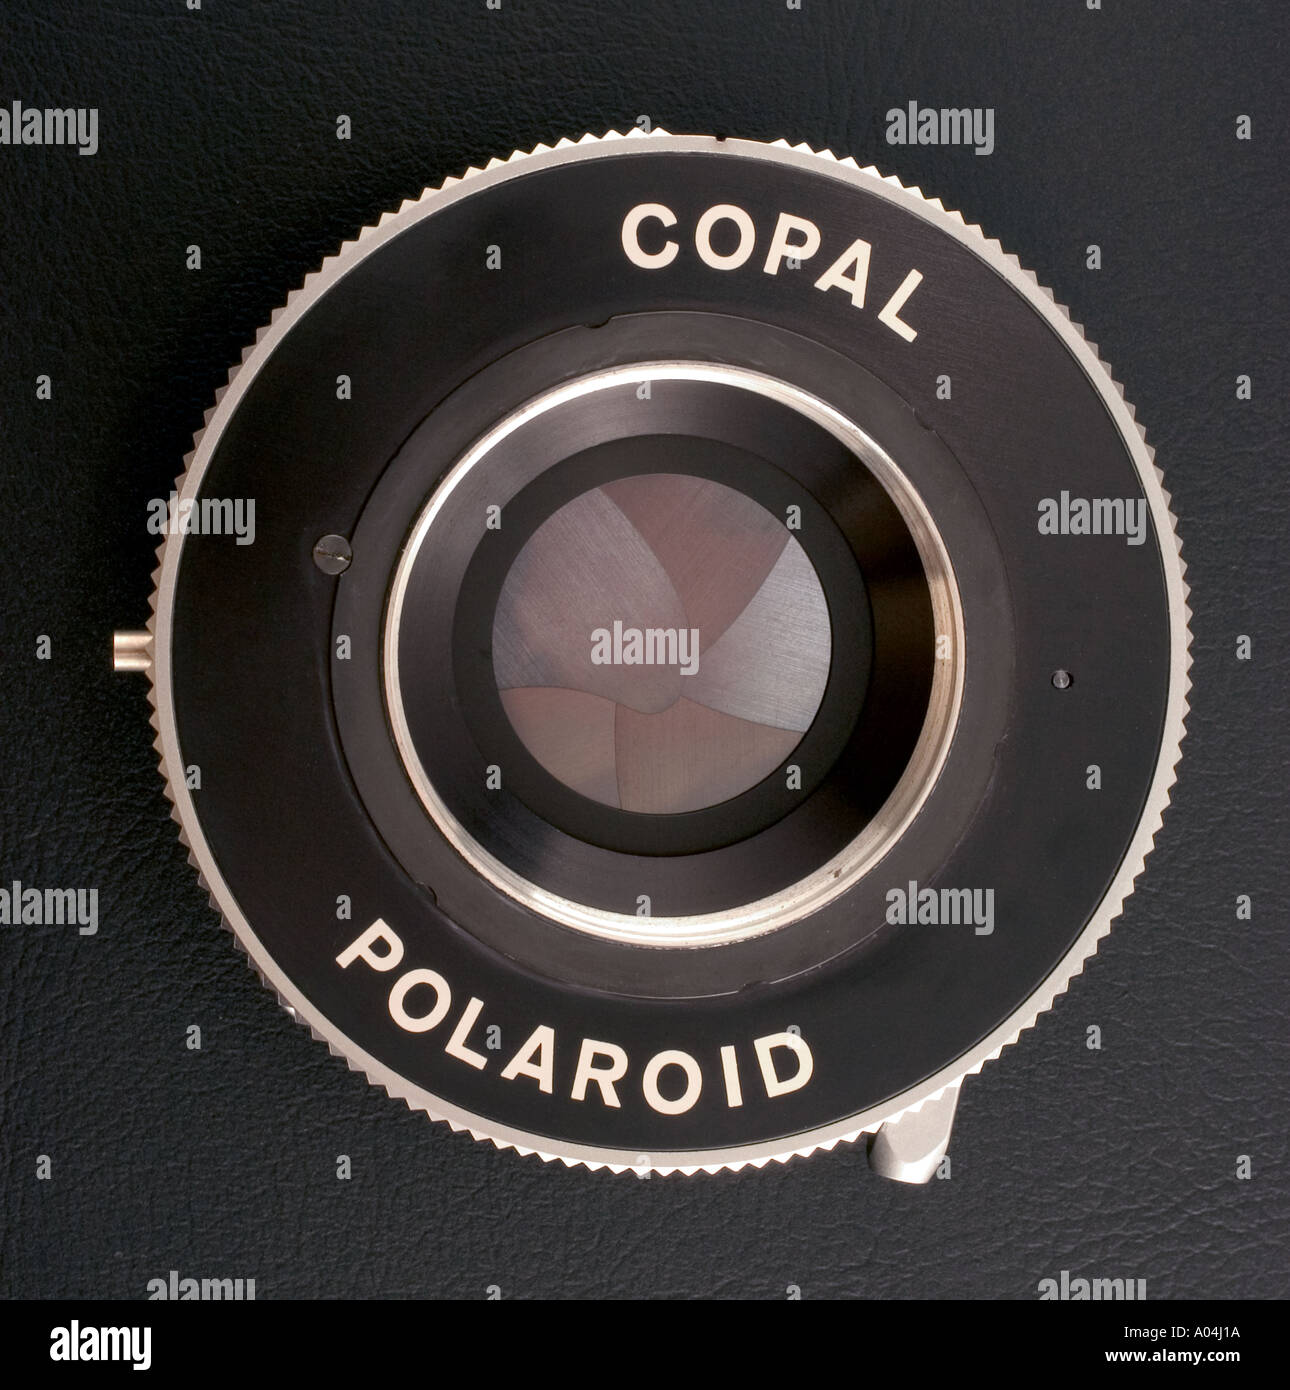 Kamera Objektiv-Verschluss Compur Blatttyp Stockfotografie - Alamy